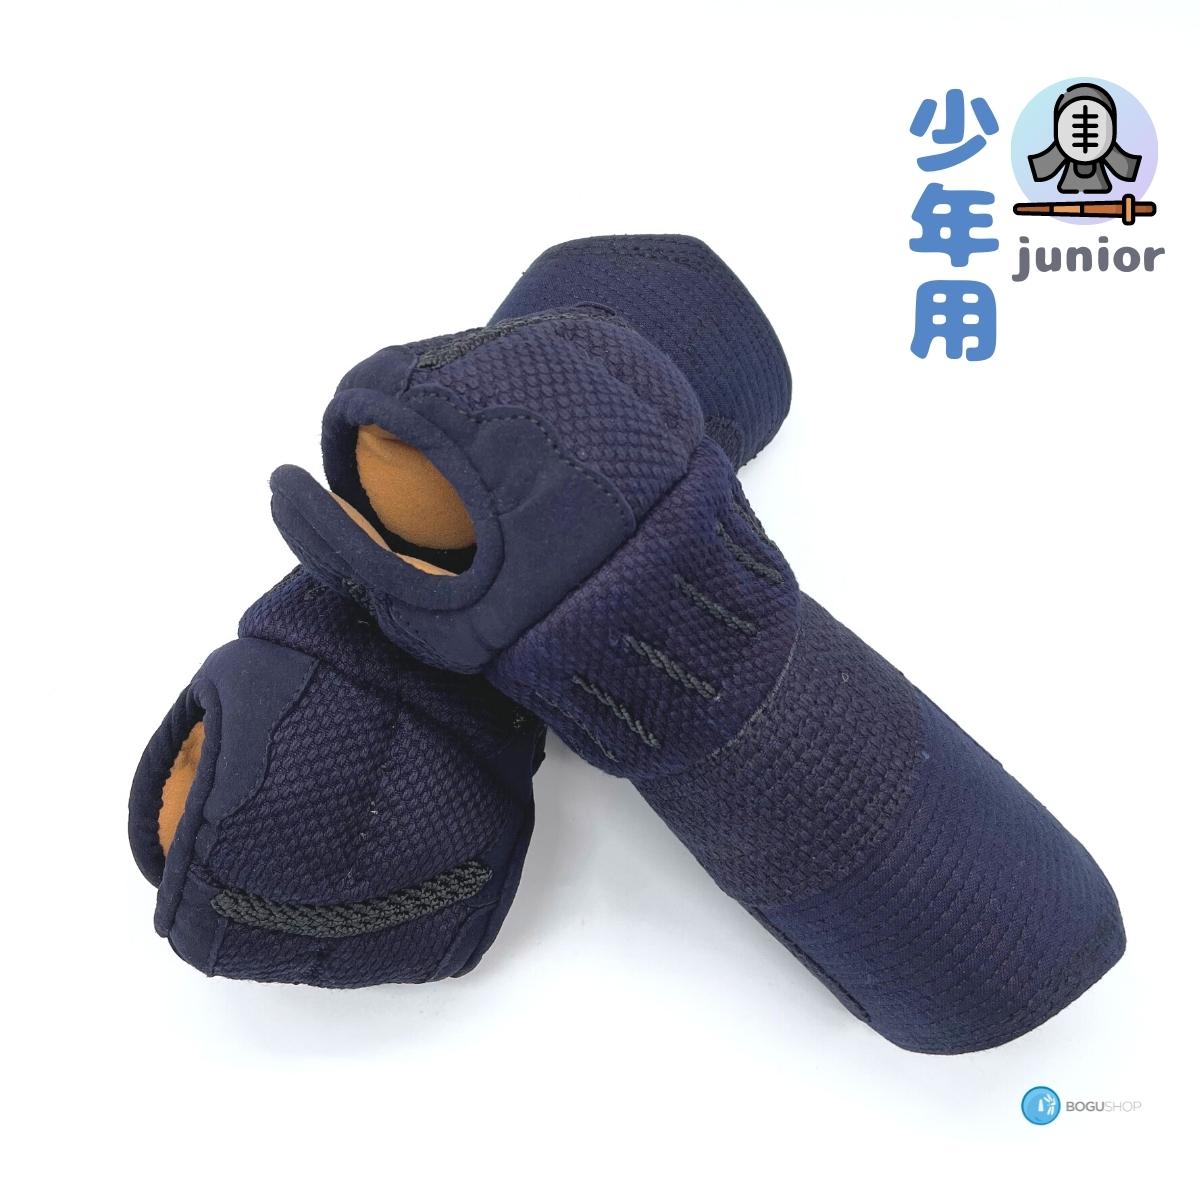 [Orizashi / Clarino Leather] Junior Bogu Set #7